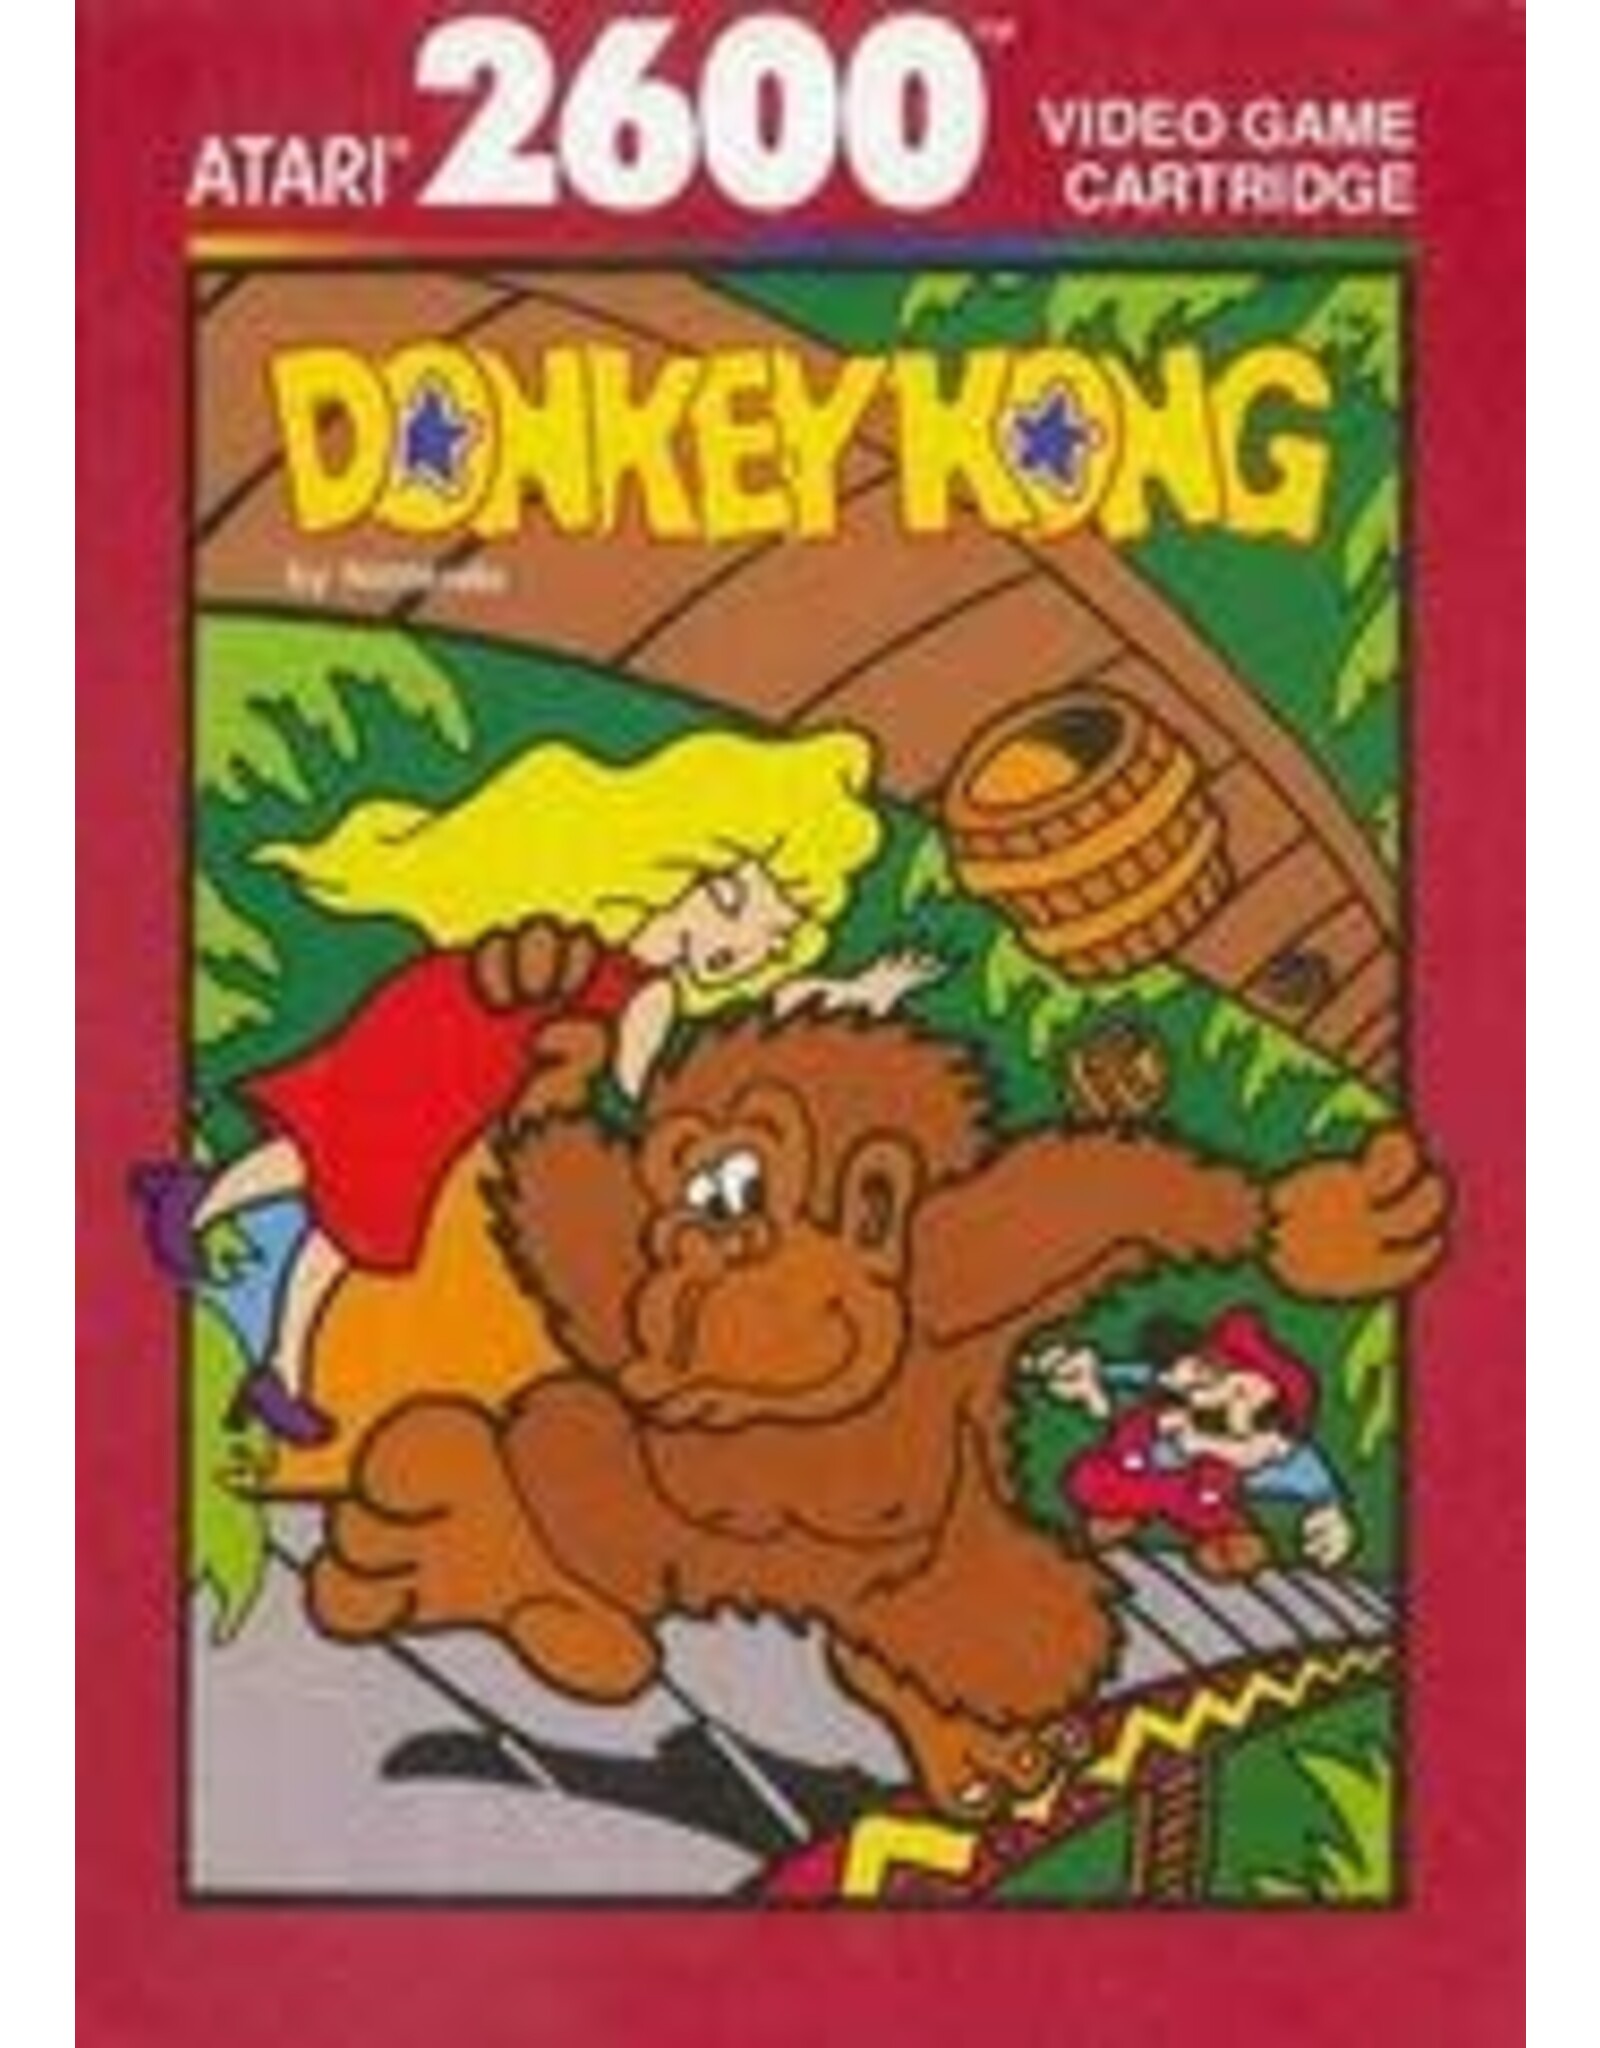 Atari 2600 Donkey Kong (Red Label, Cart Only, Cosmetic Damage)